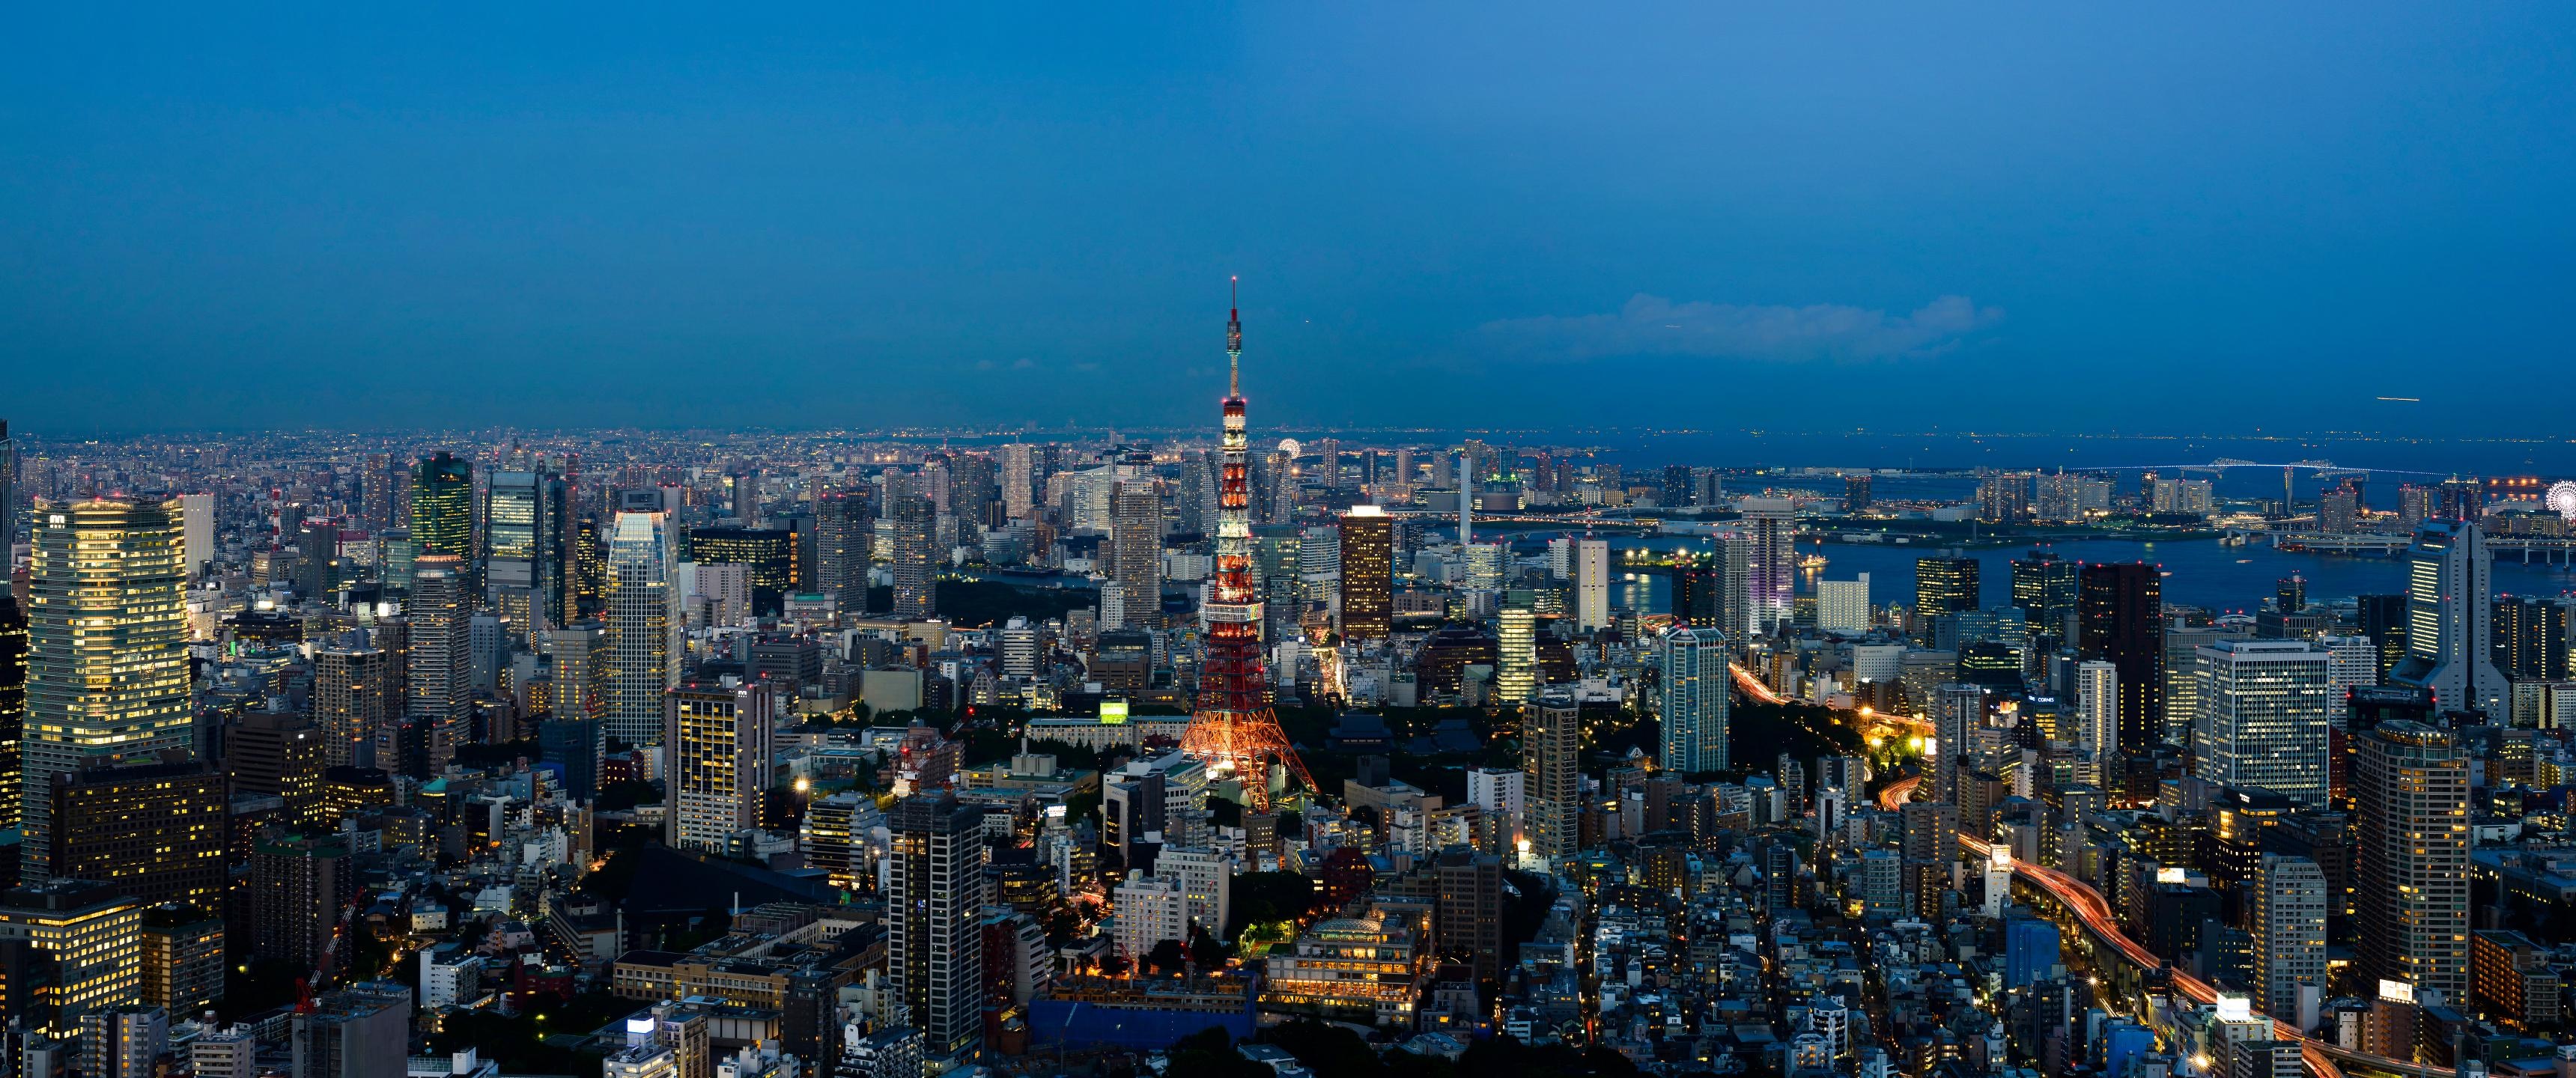 Tokyo Tower, Tokyo cityscape, Japan wallpaper, Urban scenery, 3440x1440 Dual Screen Desktop